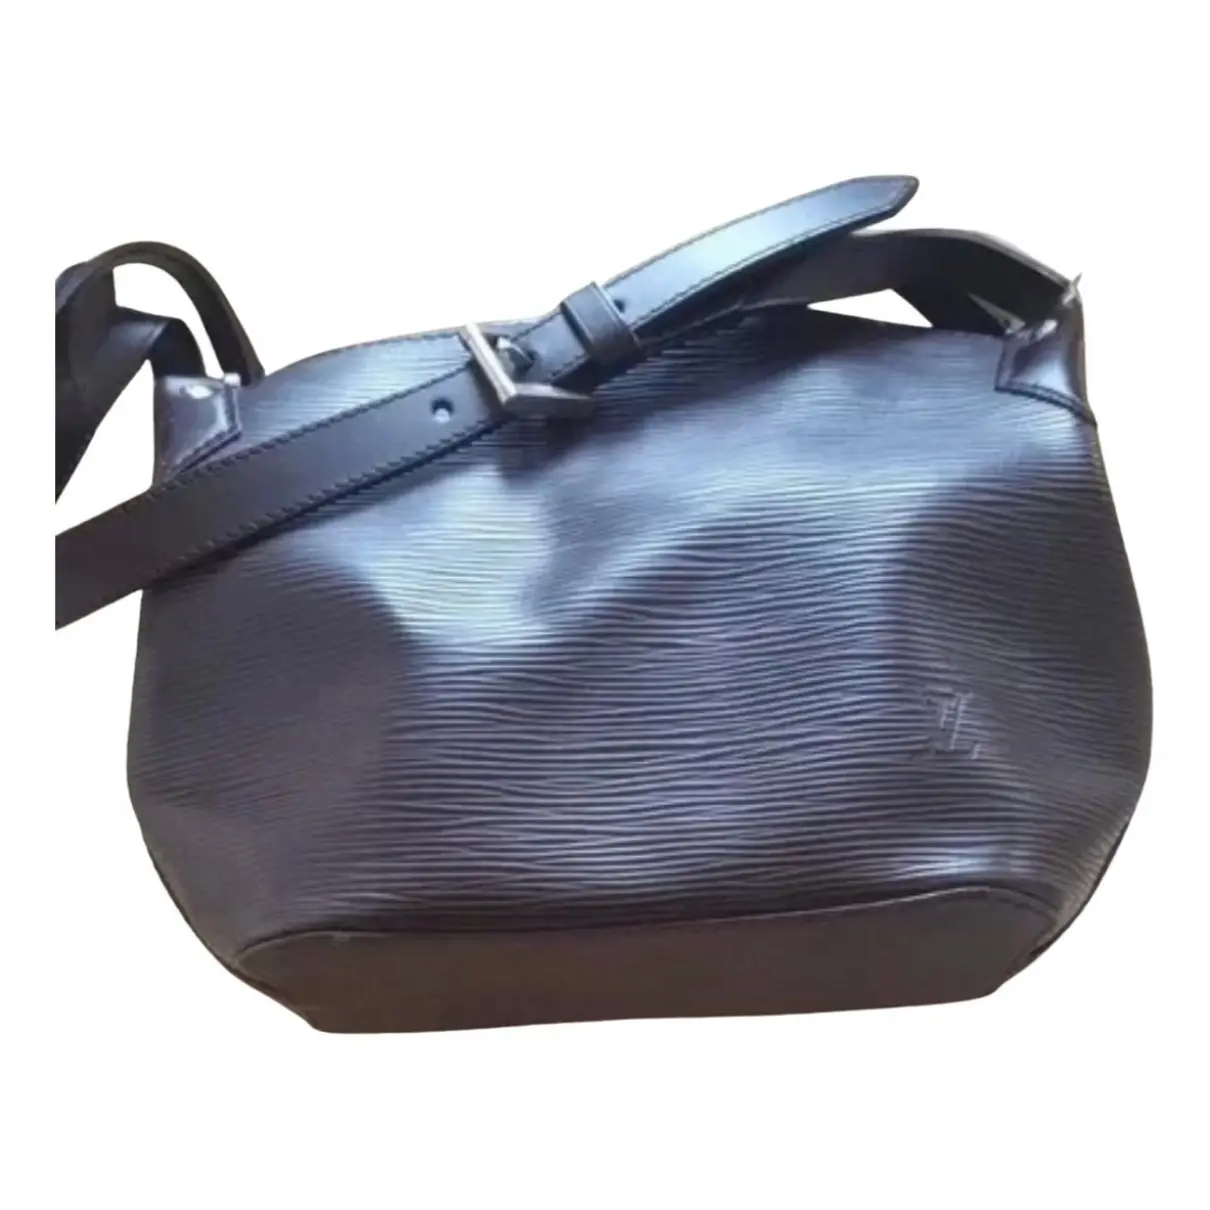 Mandara leather handbag Louis Vuitton